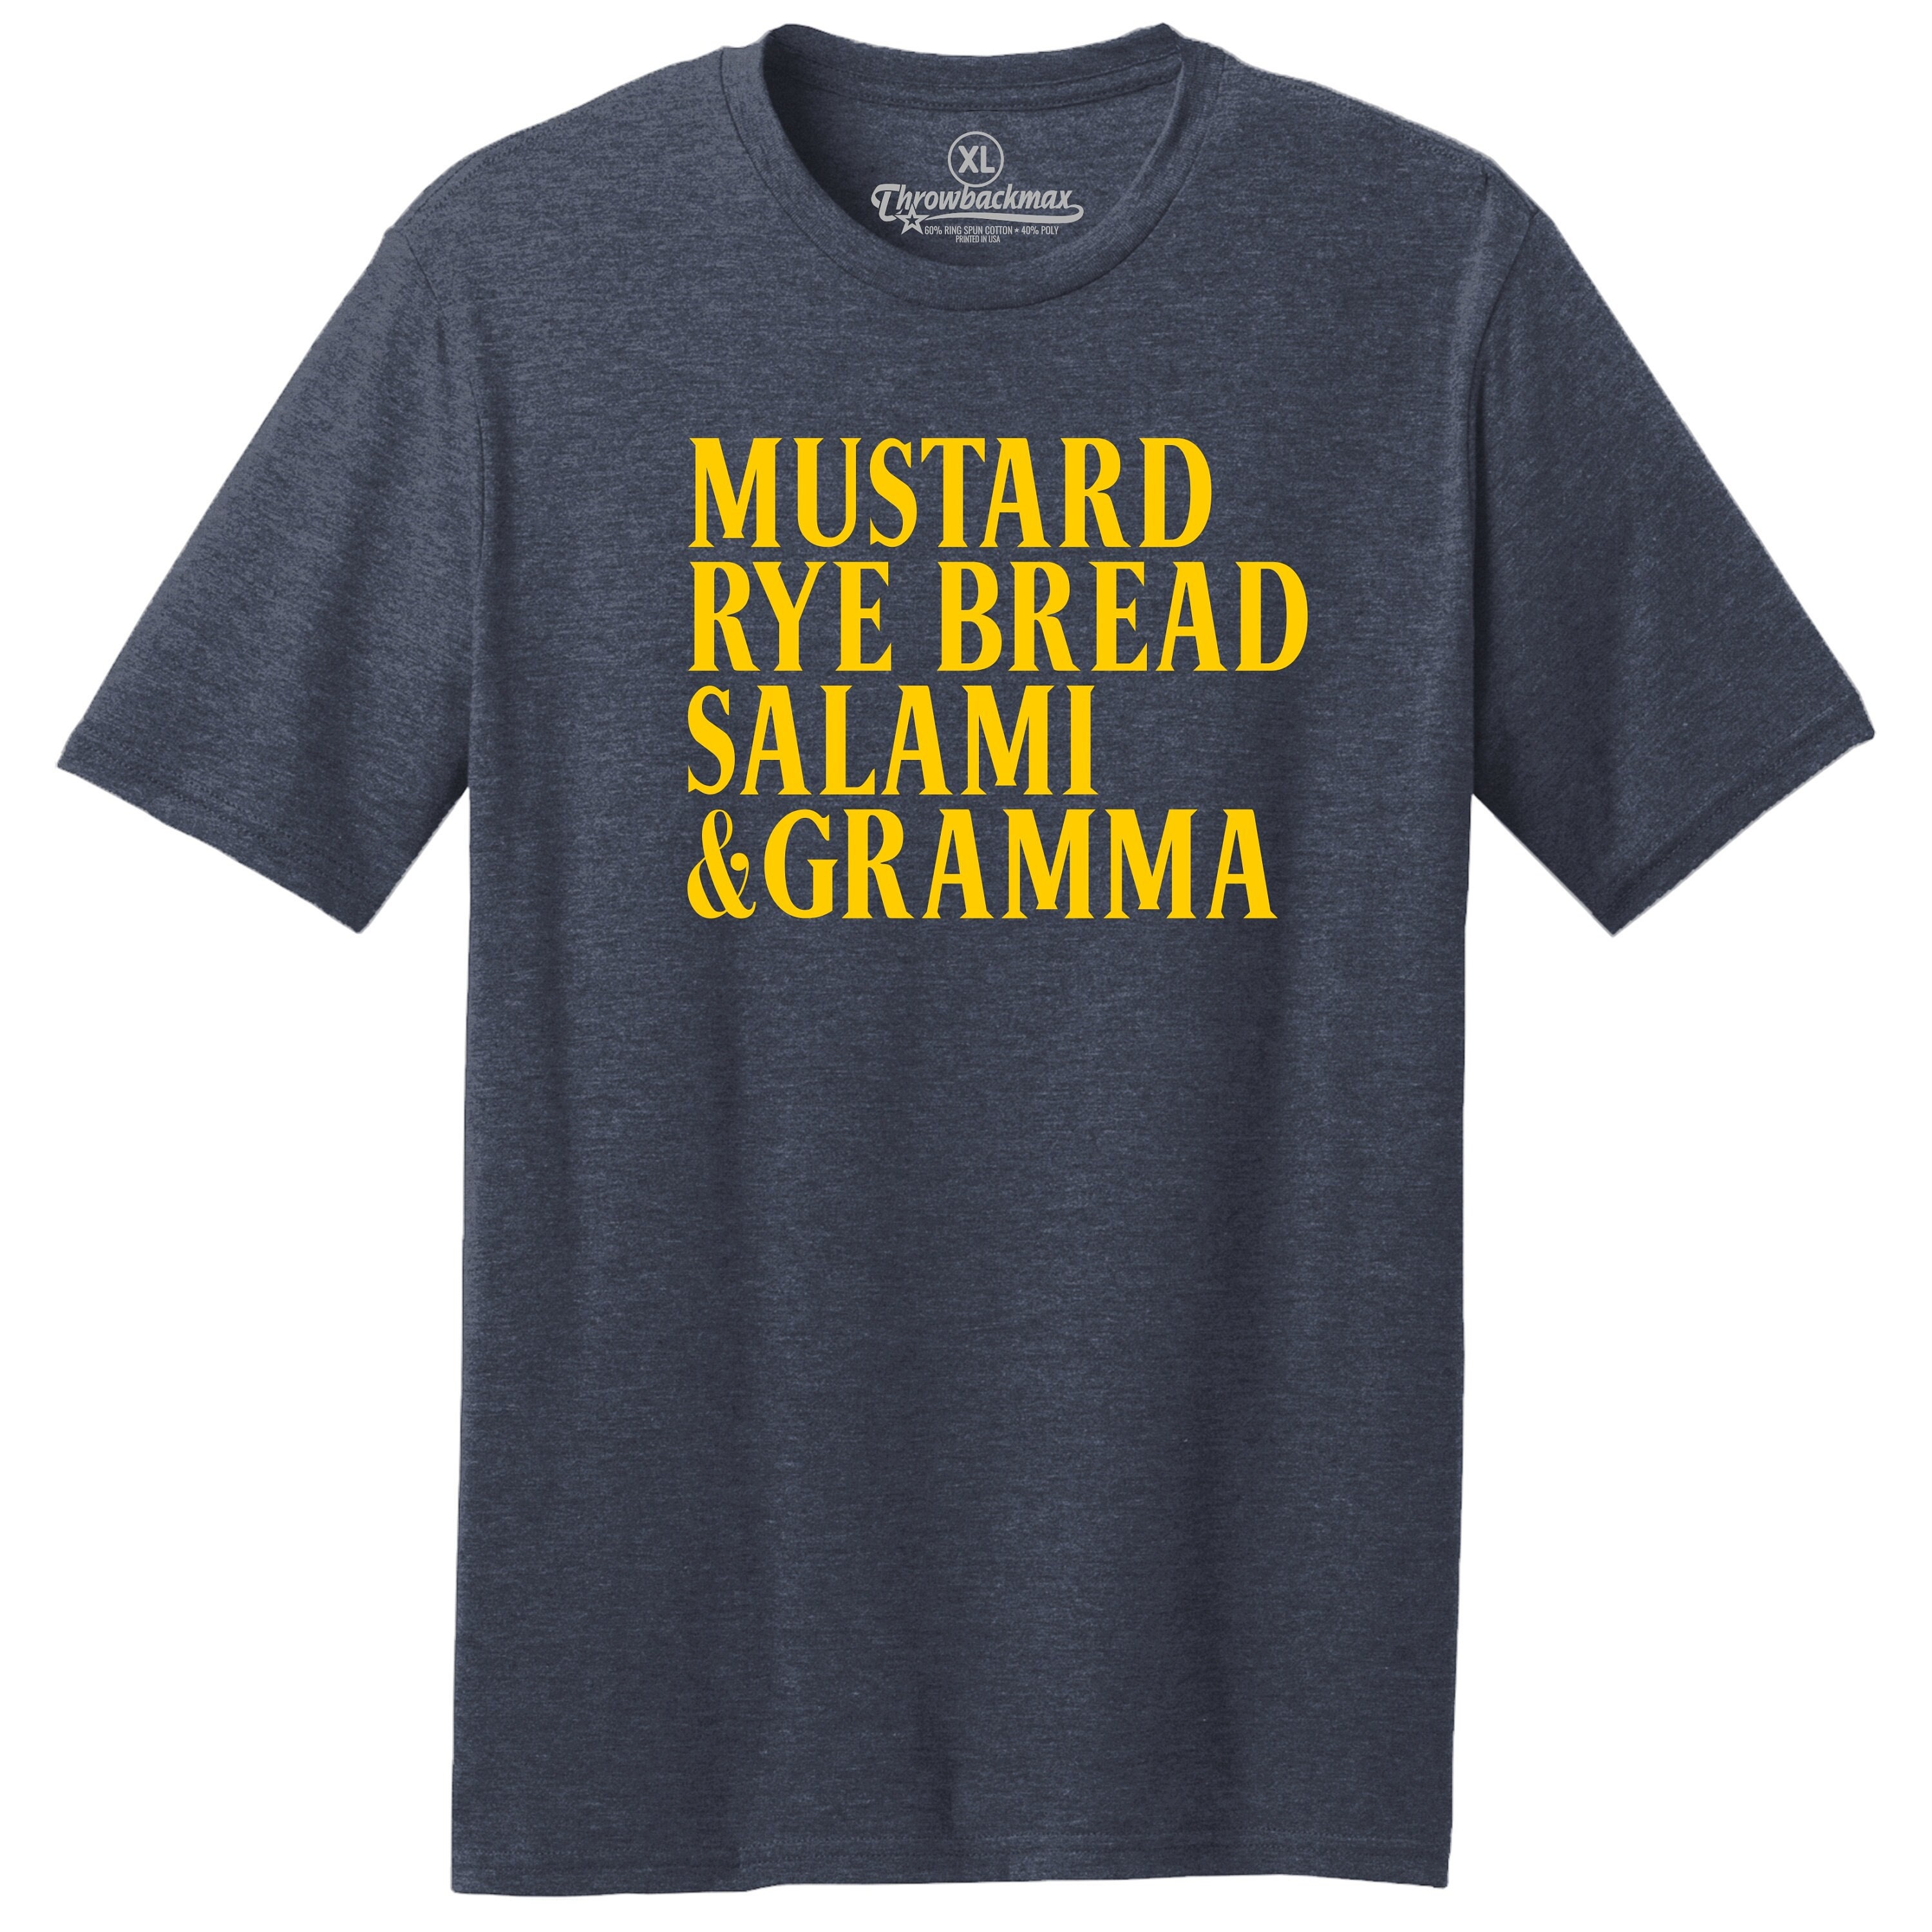 Throwbackmax mustard Rye Bread Salami & Gramma 